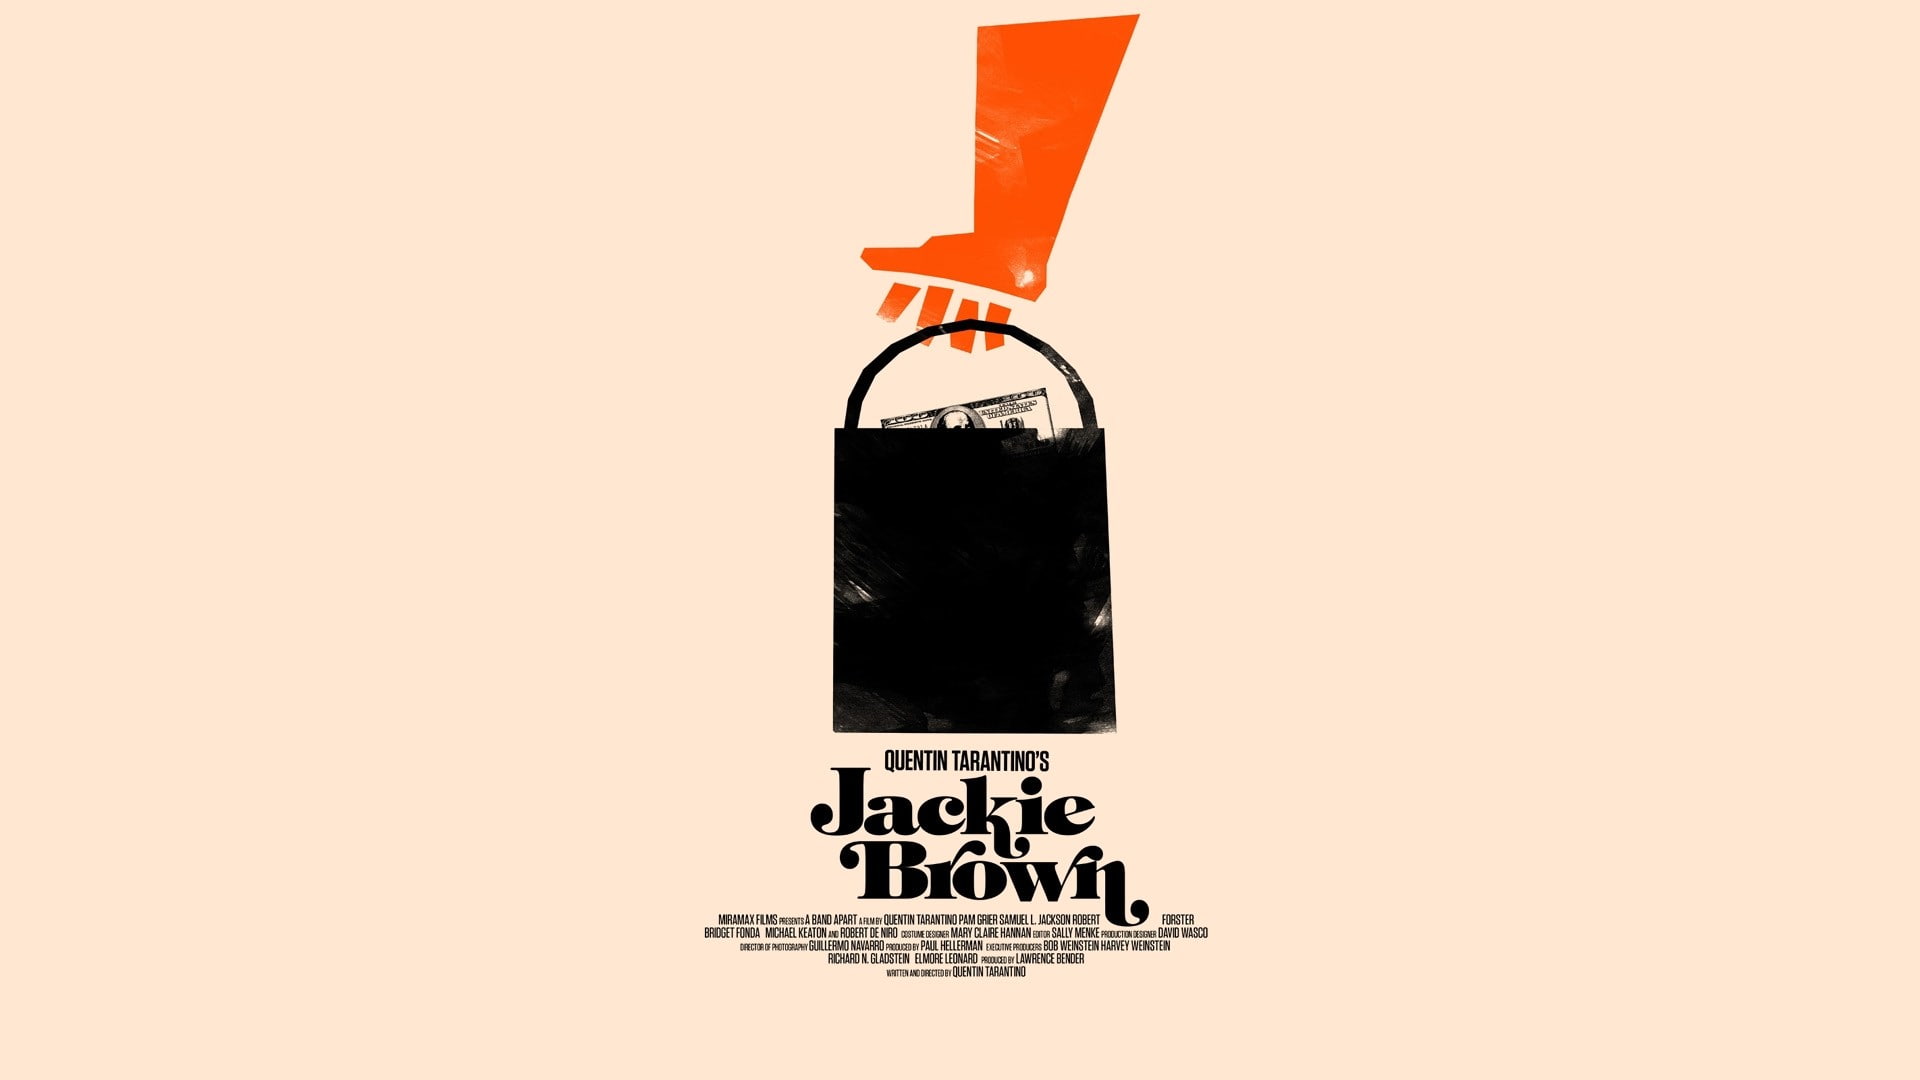 Jackie Brown, movies, minimalism, artwork, writing, studio shot